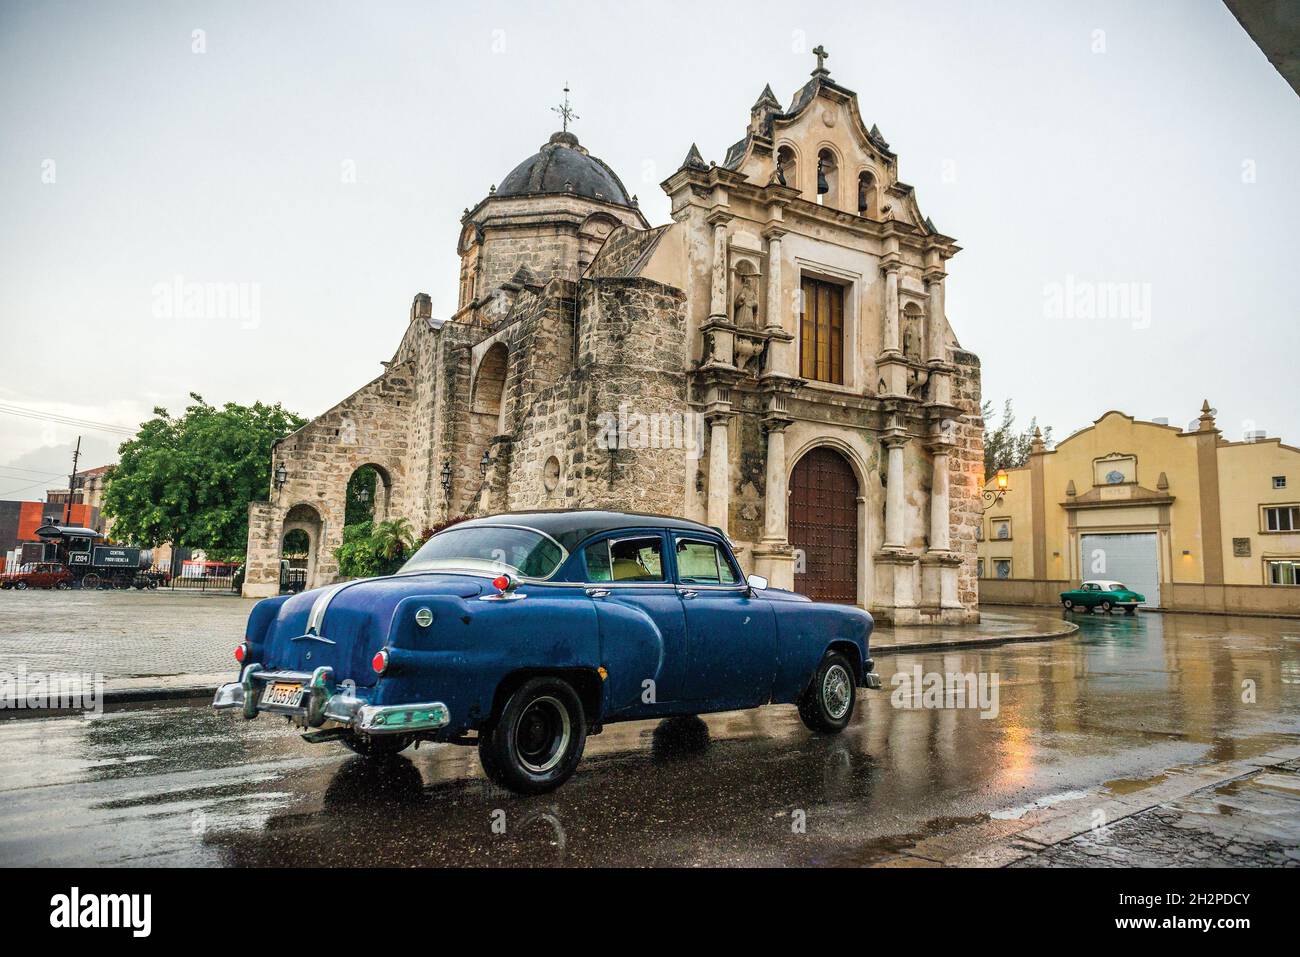 LA HABANA, CUBA - Apr 15, 2019: A classic Pontiac on a wet asphalt passing by Iglesia de San Francisco Paula in Havana, Cuba Stock Photo